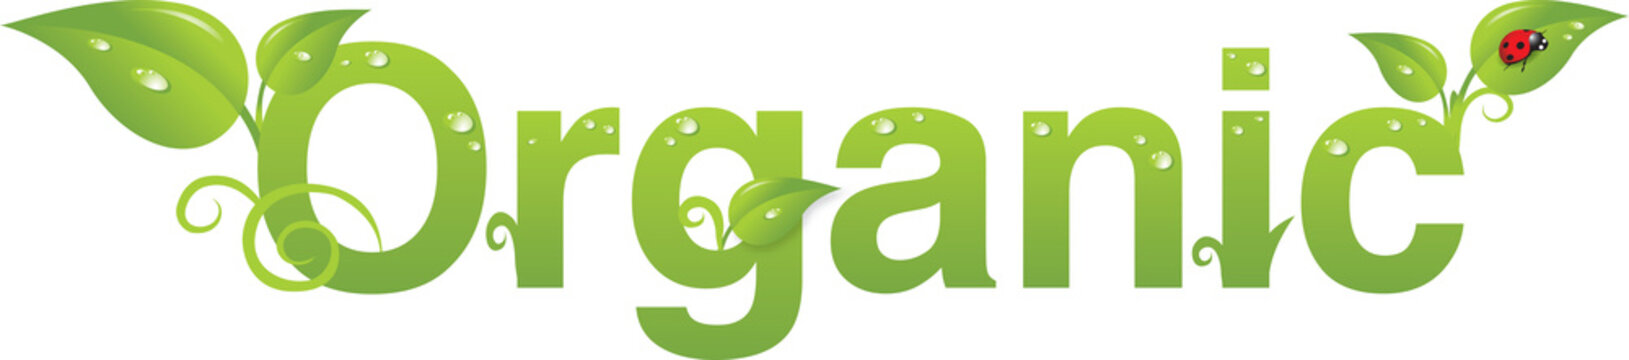 Organic icon logo label